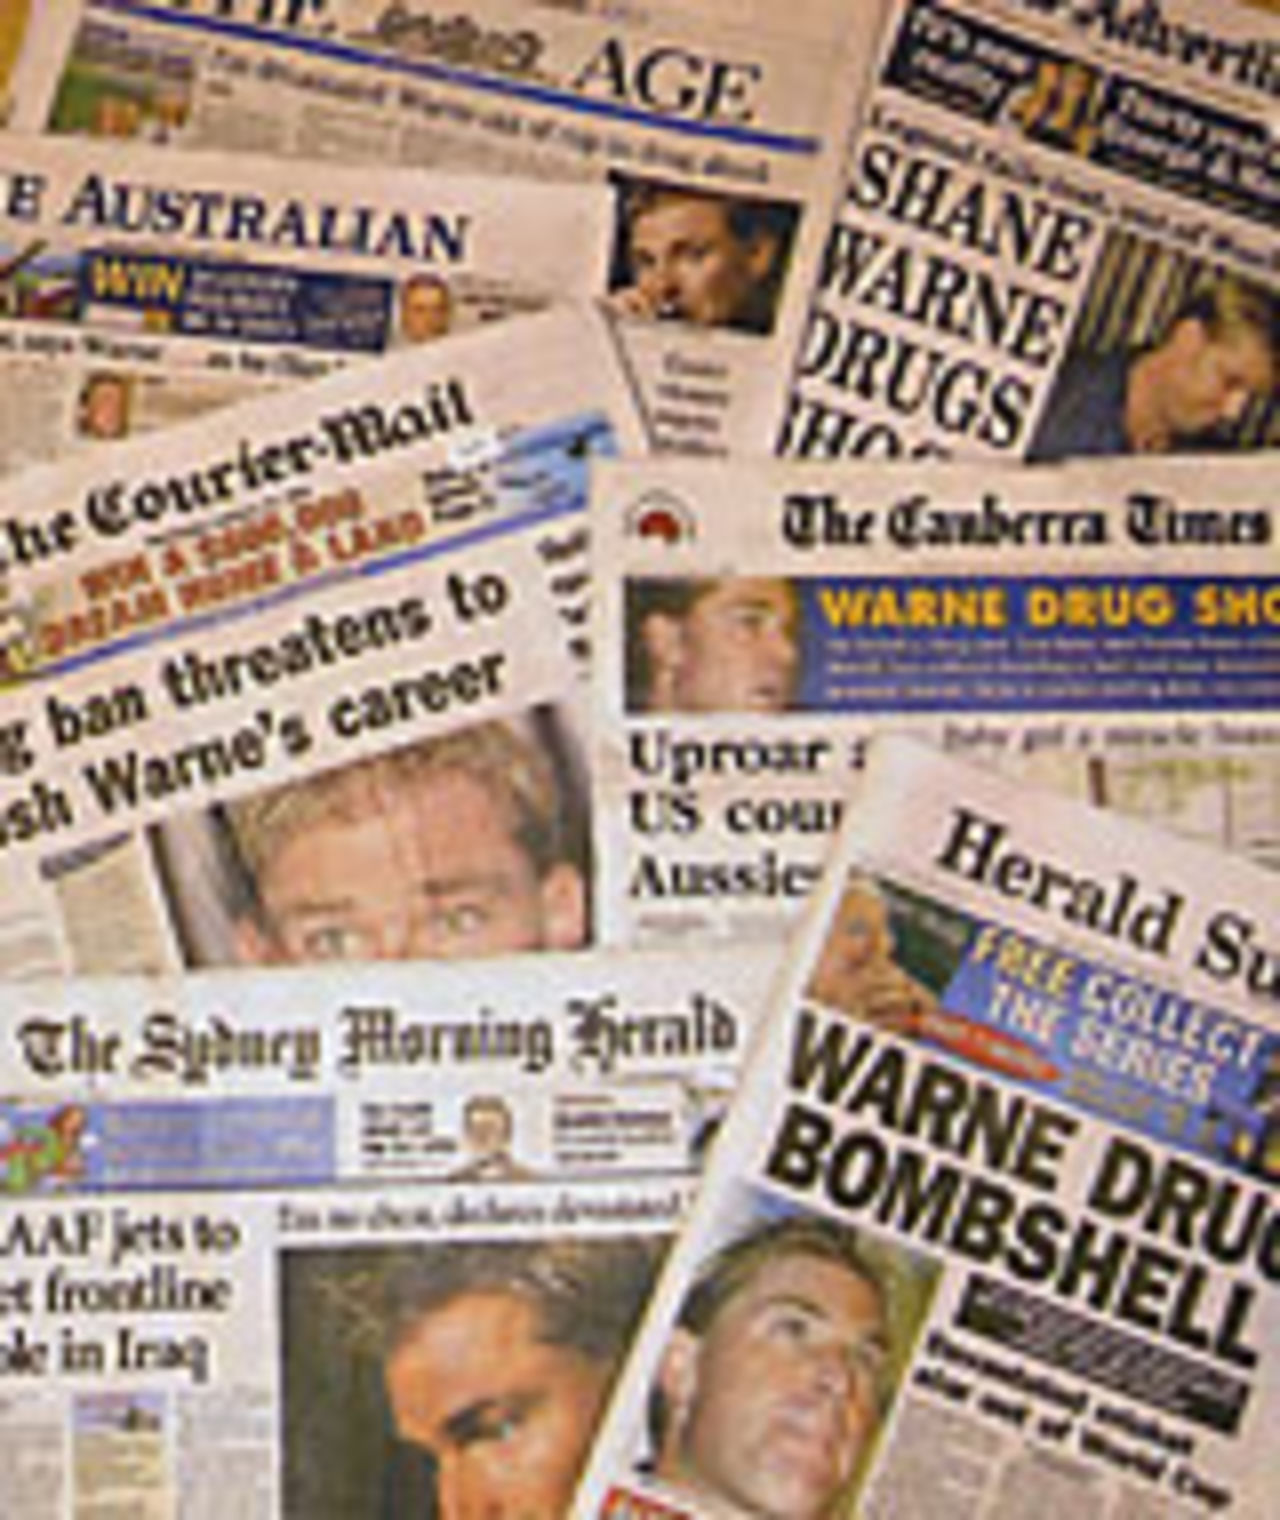 Newspapers react to Shane Warne drugs news, February, 2003